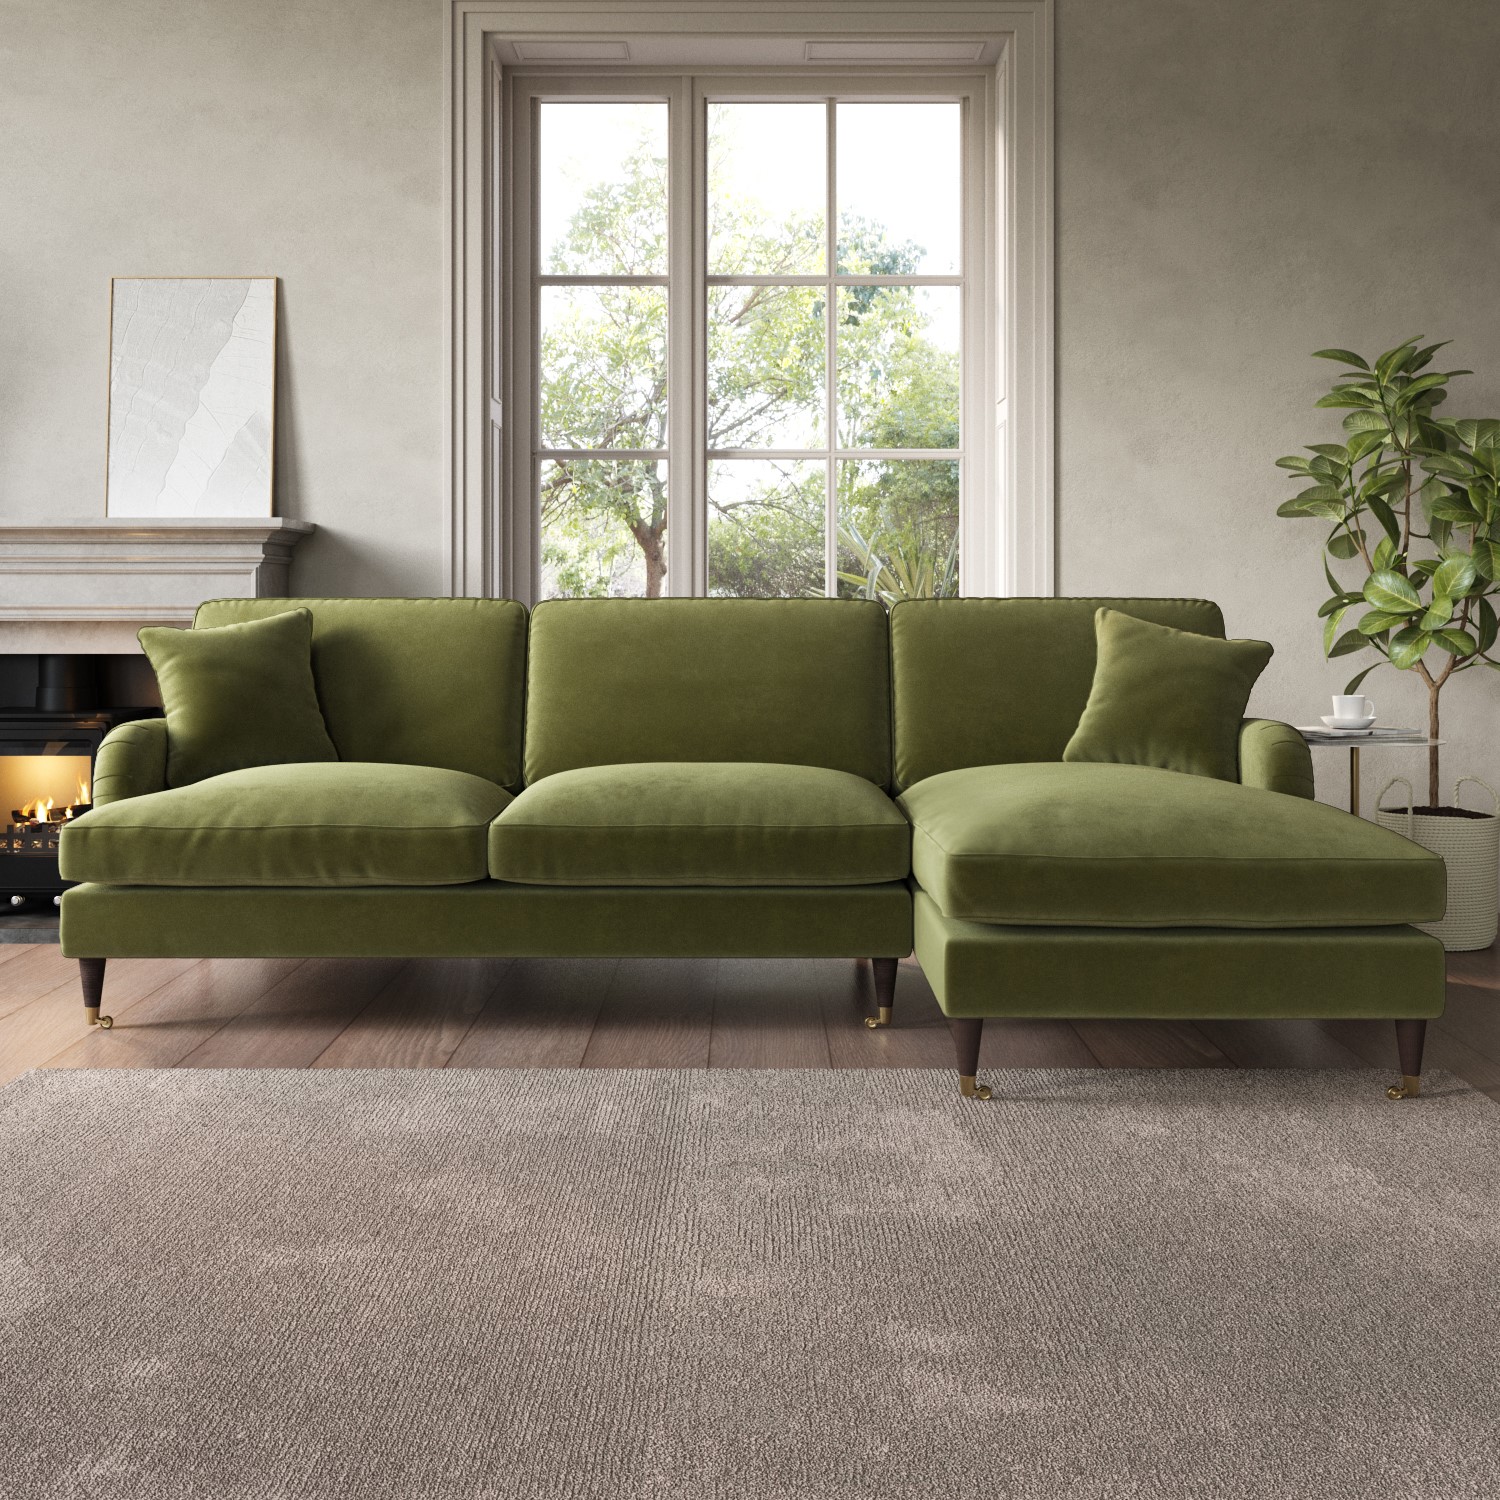 Photo of Olive green velvet right hand l shaped sofa - seats 4 - payton